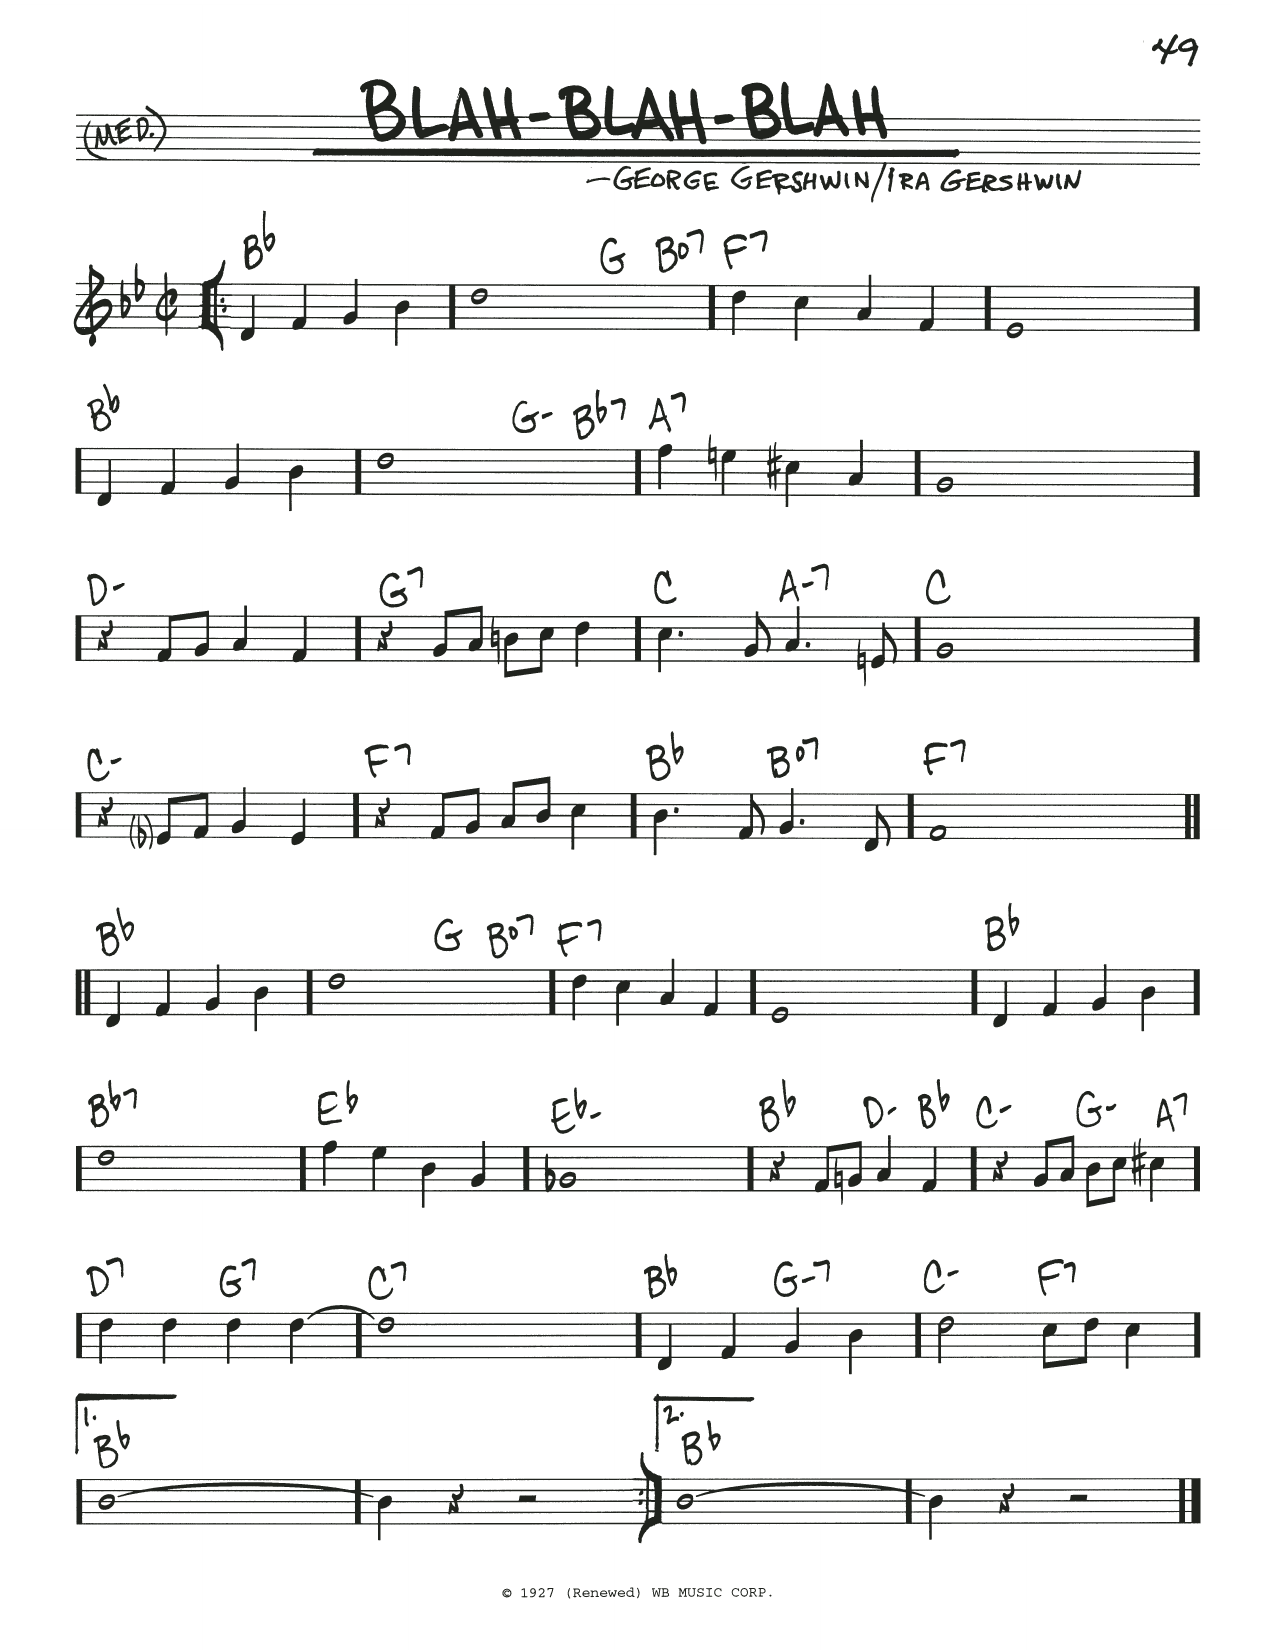 Download George Gershwin & Ira Gershwin Blah, Blah, Blah Sheet Music and learn how to play Real Book – Melody & Chords PDF digital score in minutes